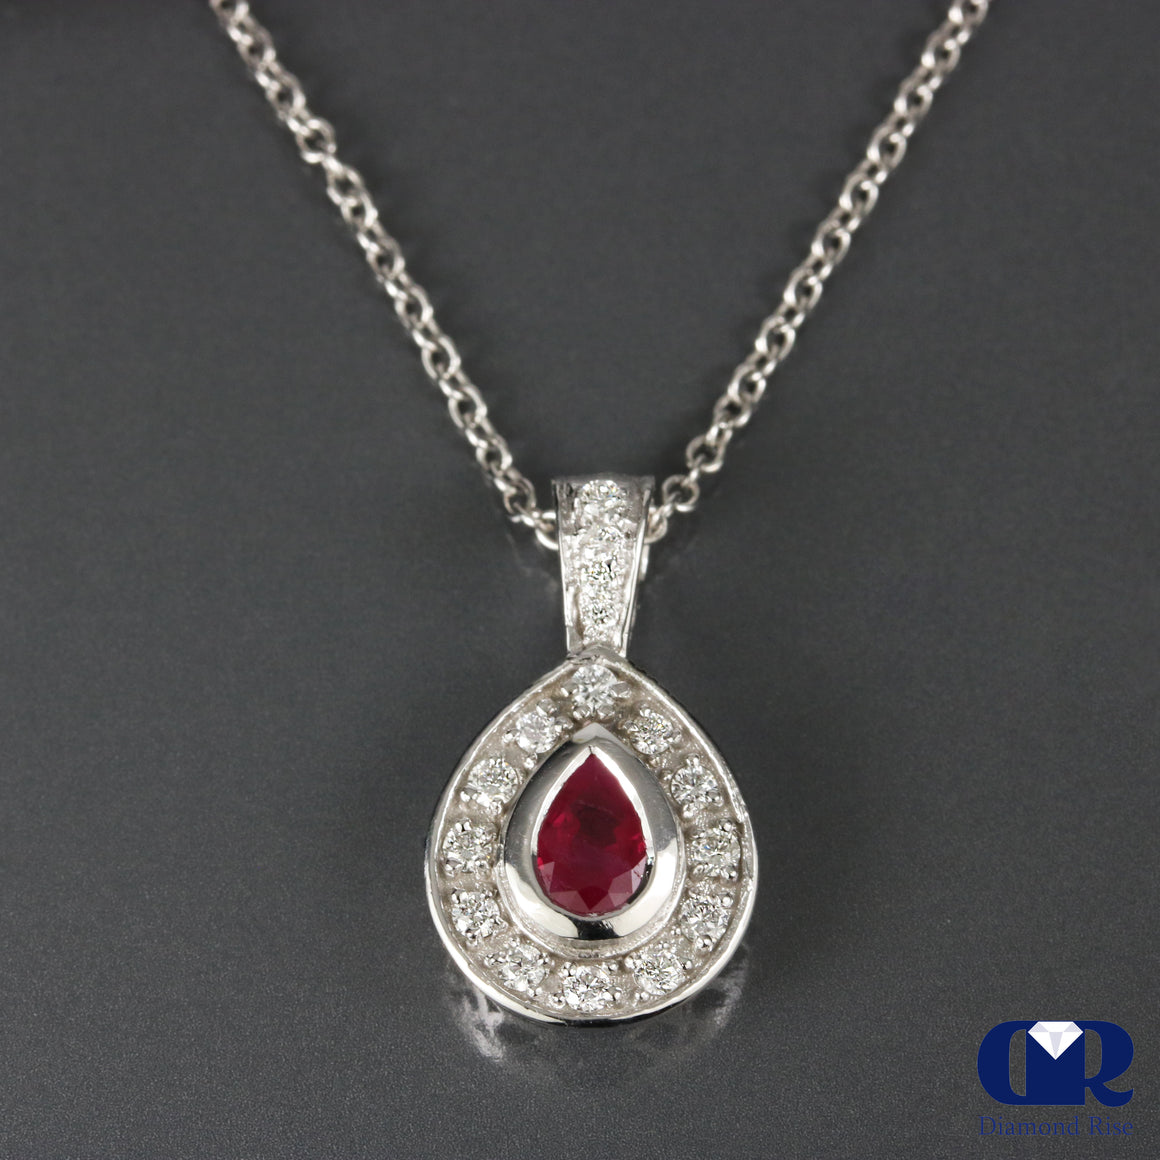 0.96 Carat Ruby & Diamond Pendant Necklace 14K White Gold W/Chain